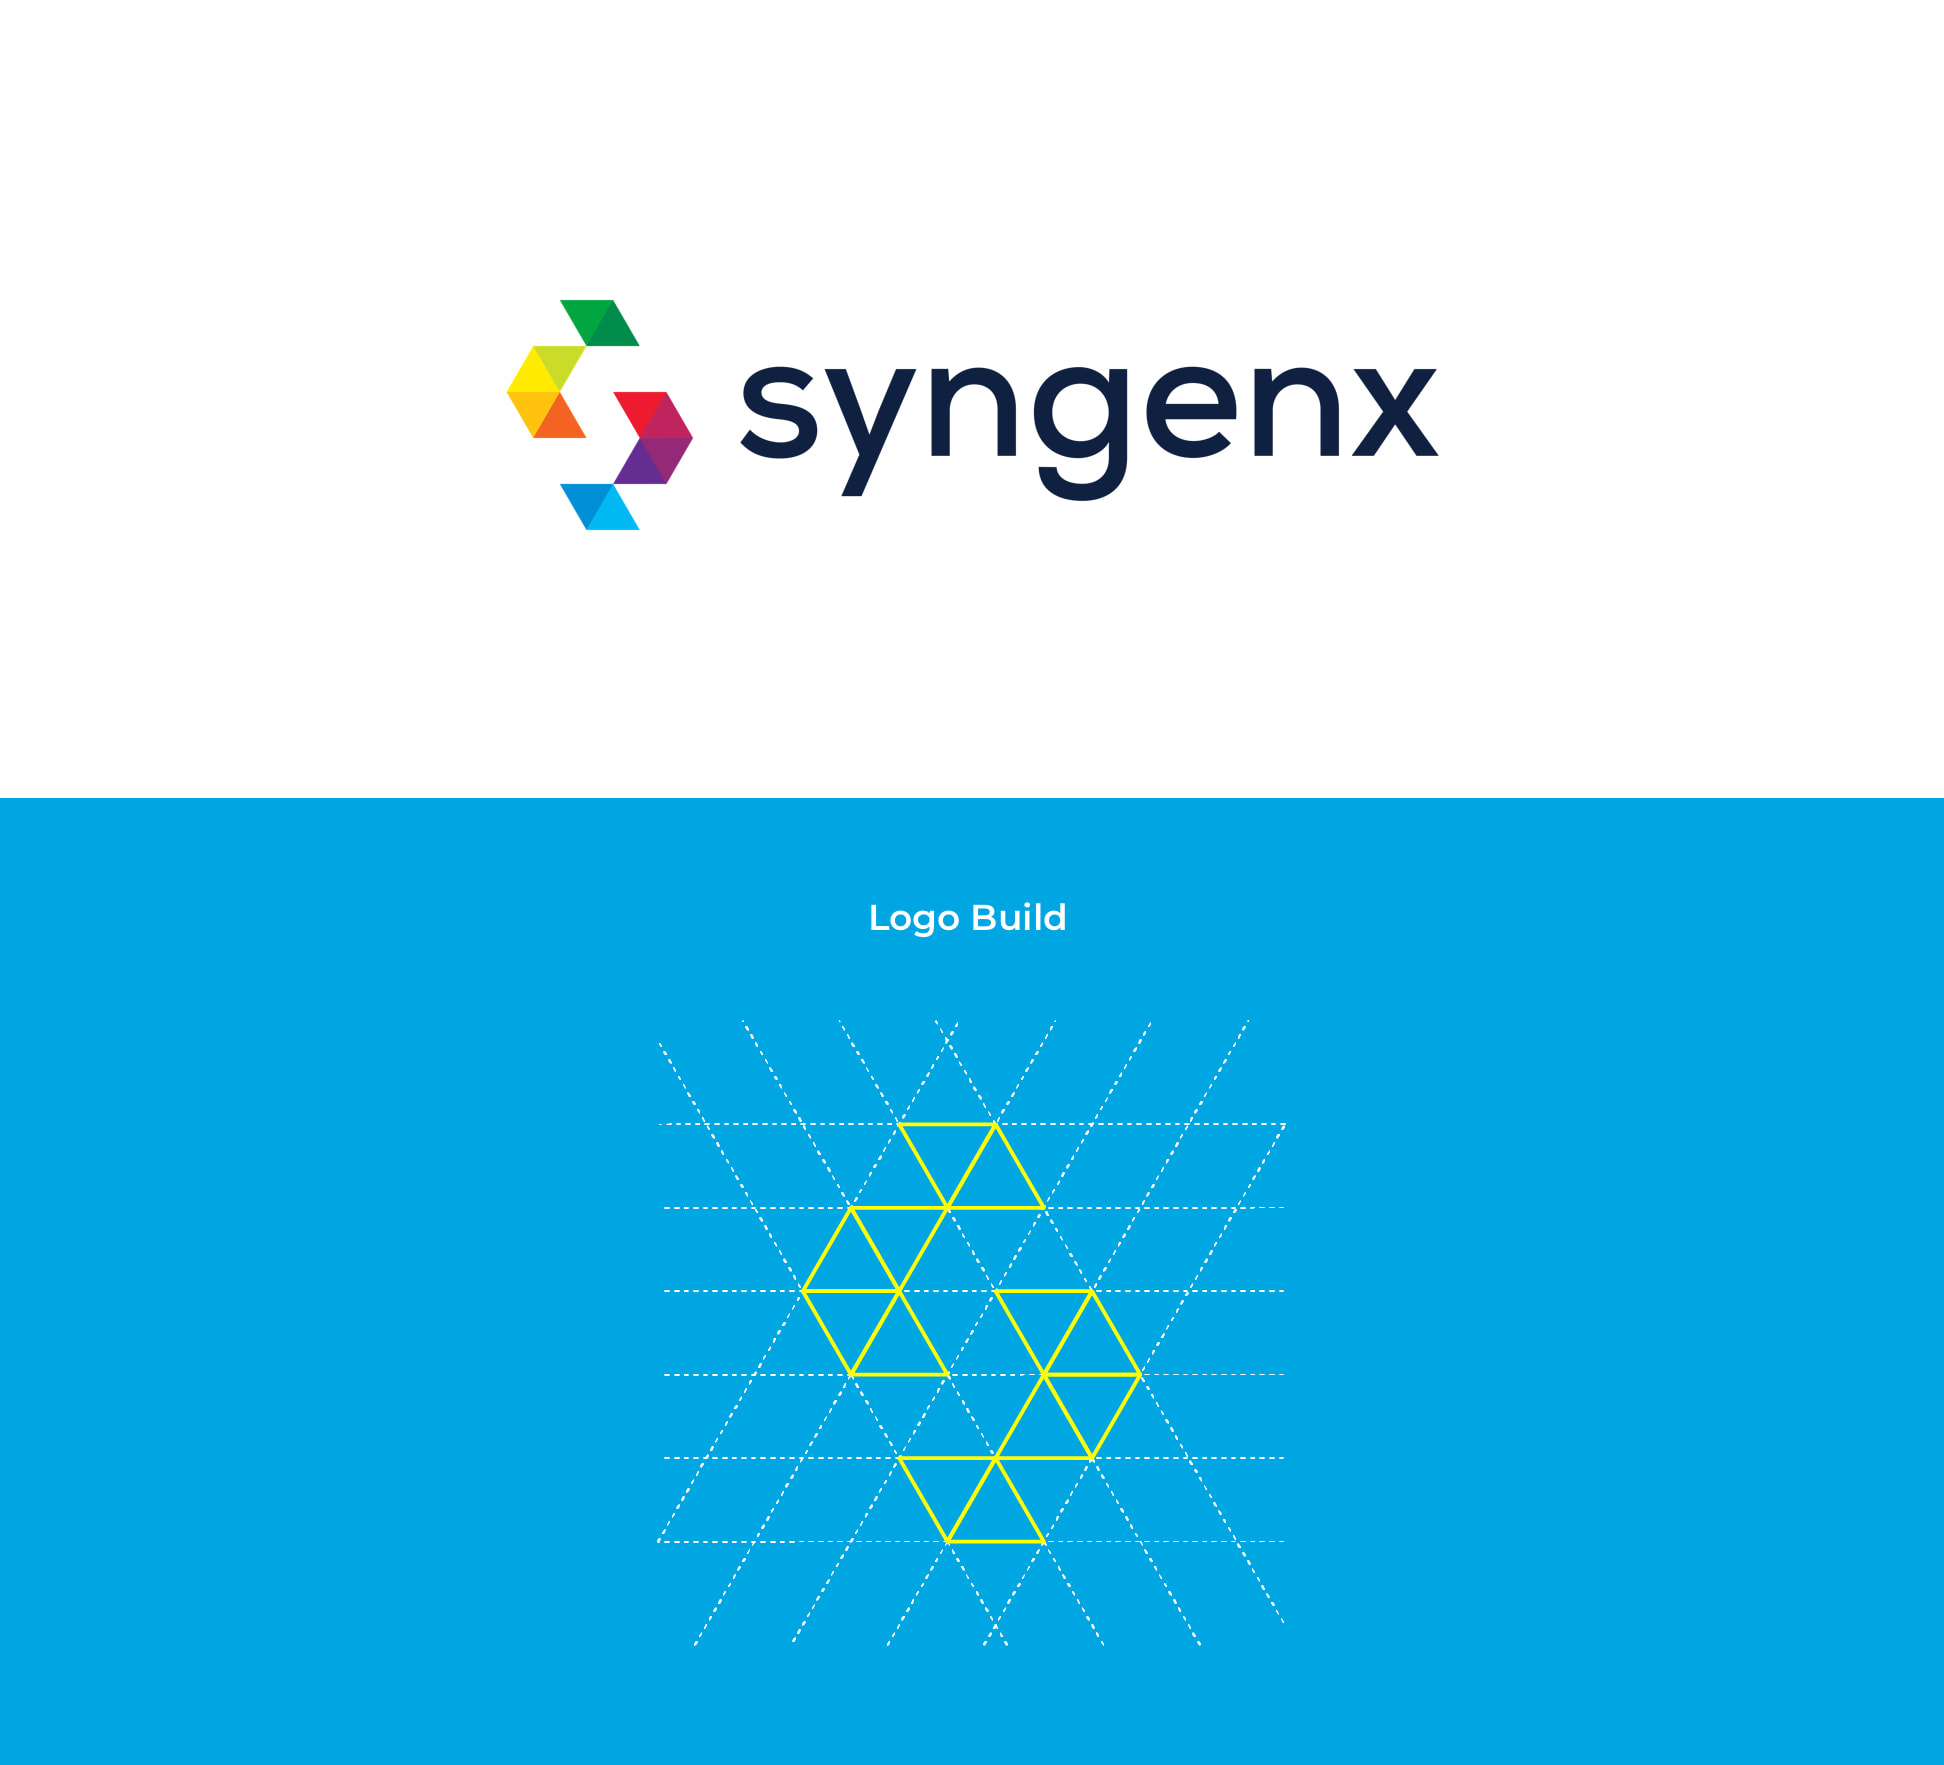 syngenx brand logo